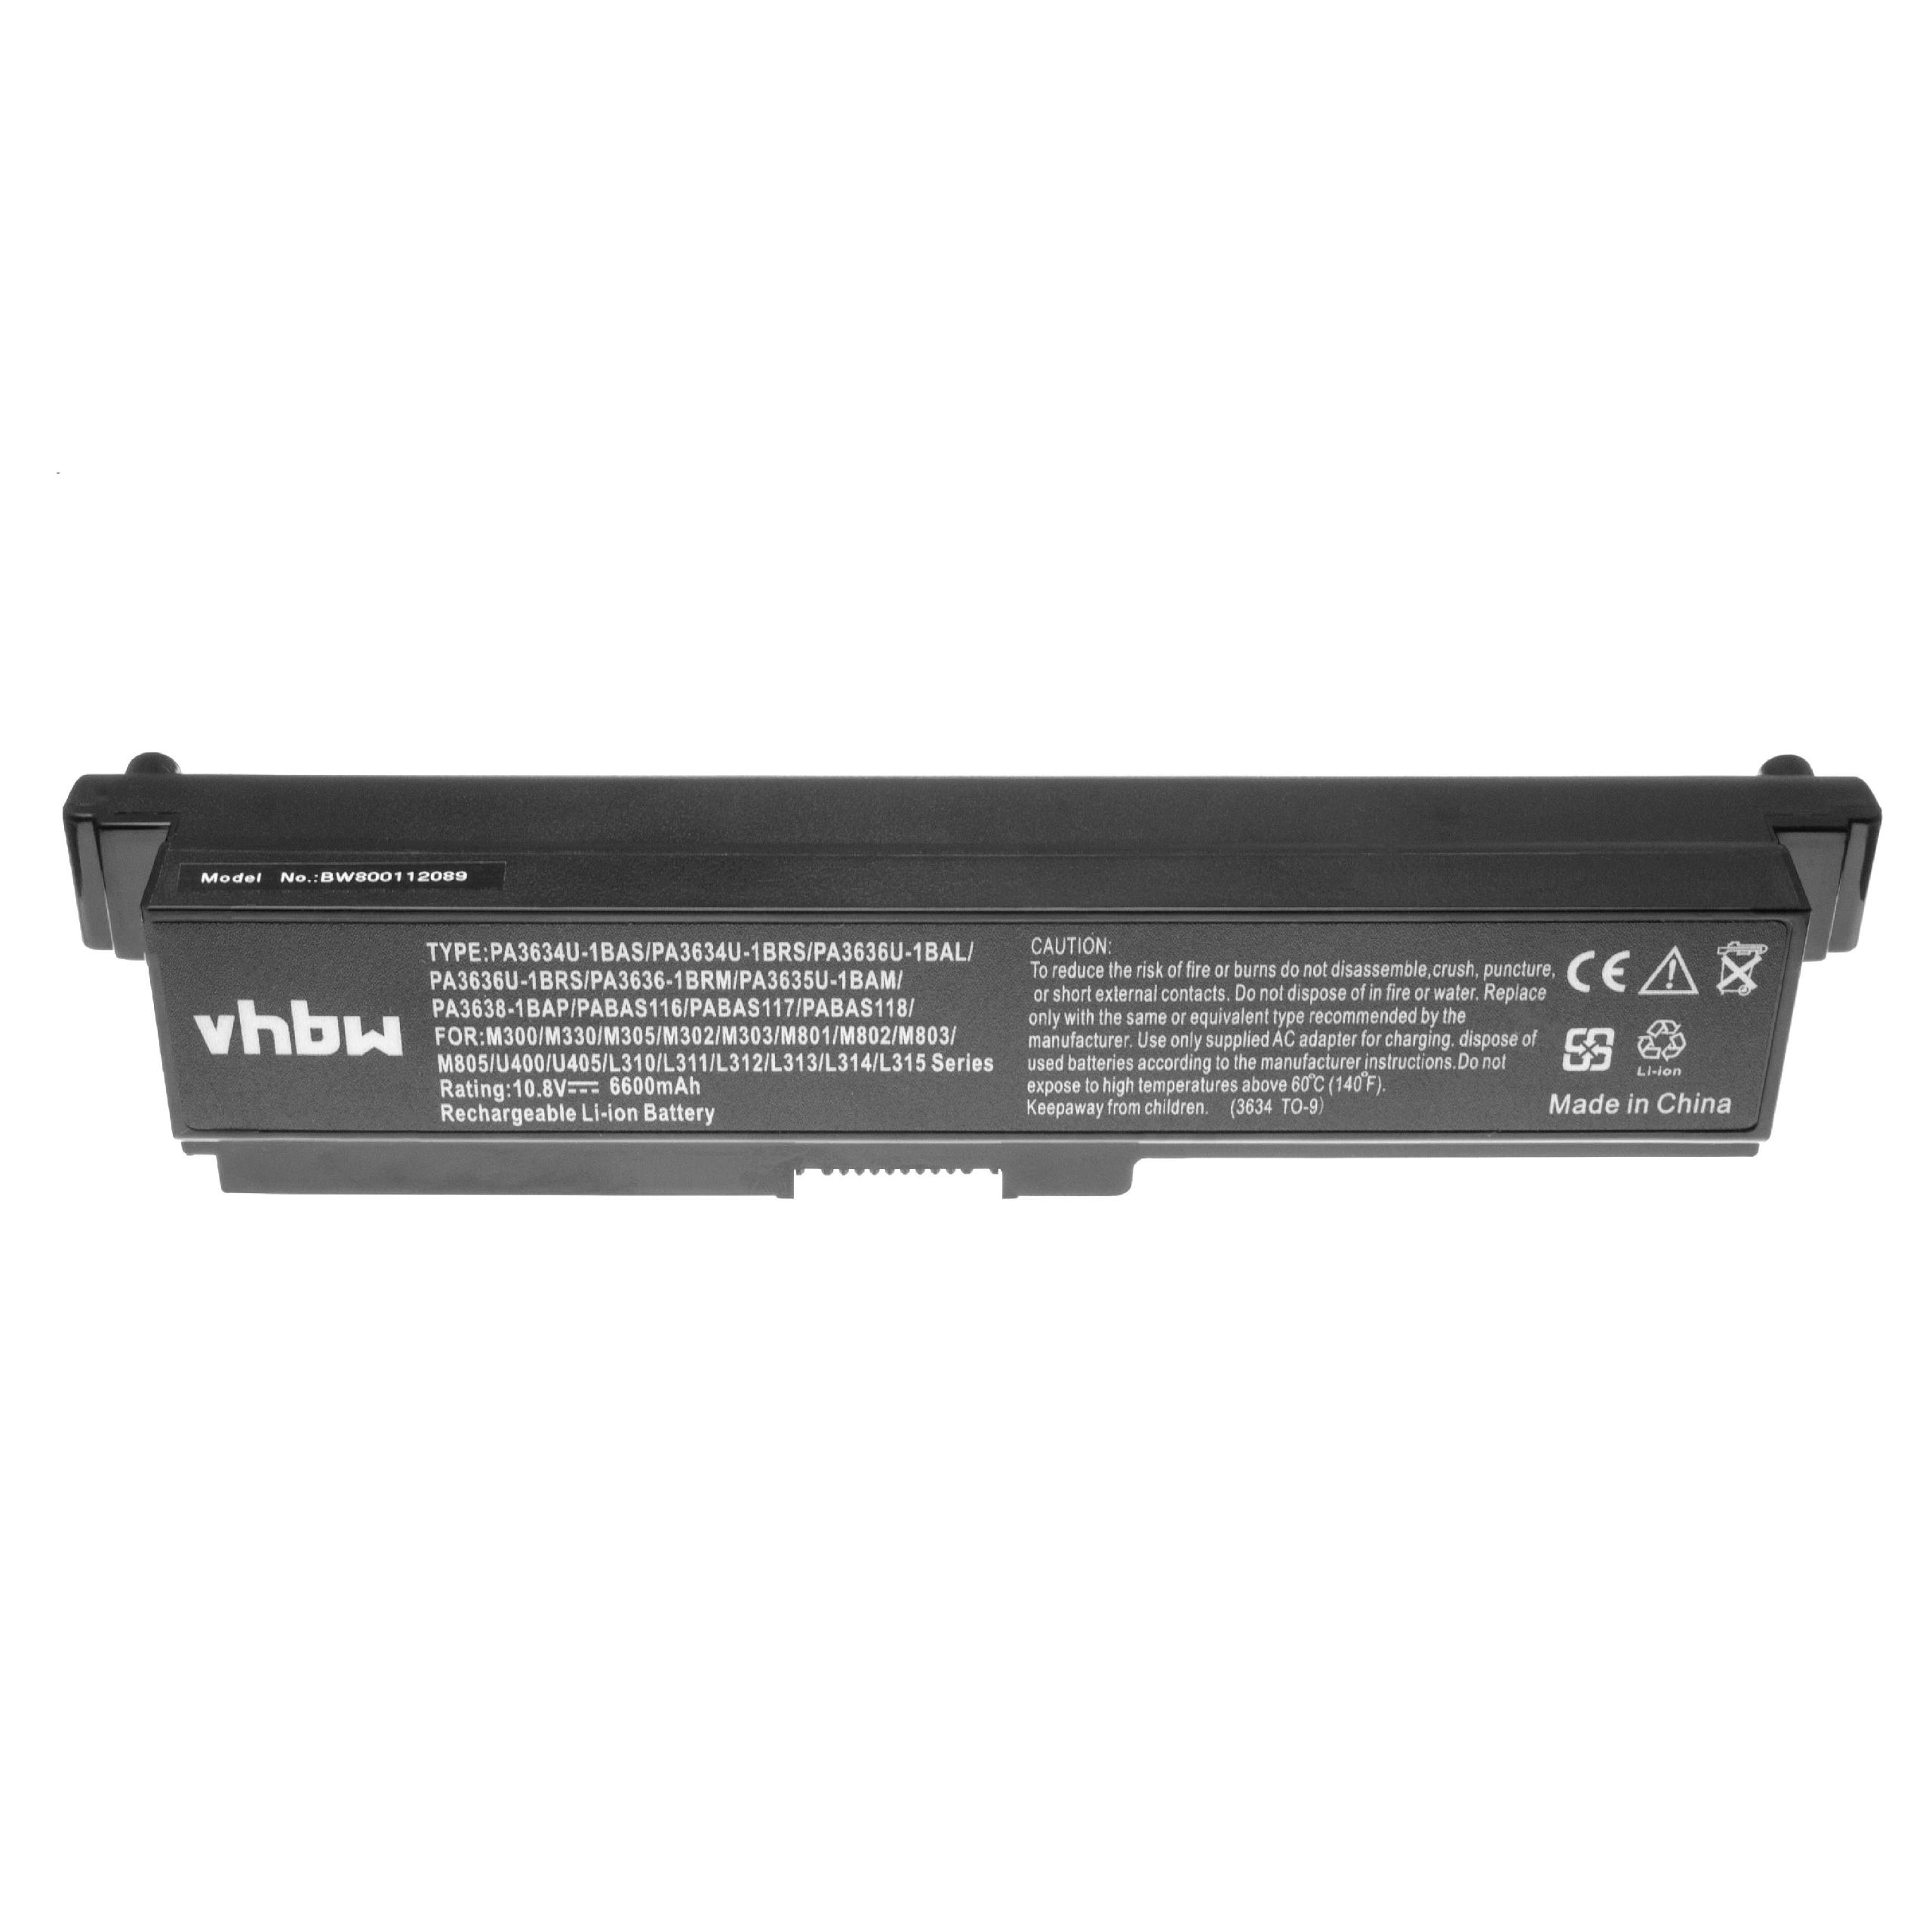 Notebook Battery Replacement for Toshiba PA3635U-1BAM, PA3634U-1BAS - 6600mAh 10.8V Li-Ion, black